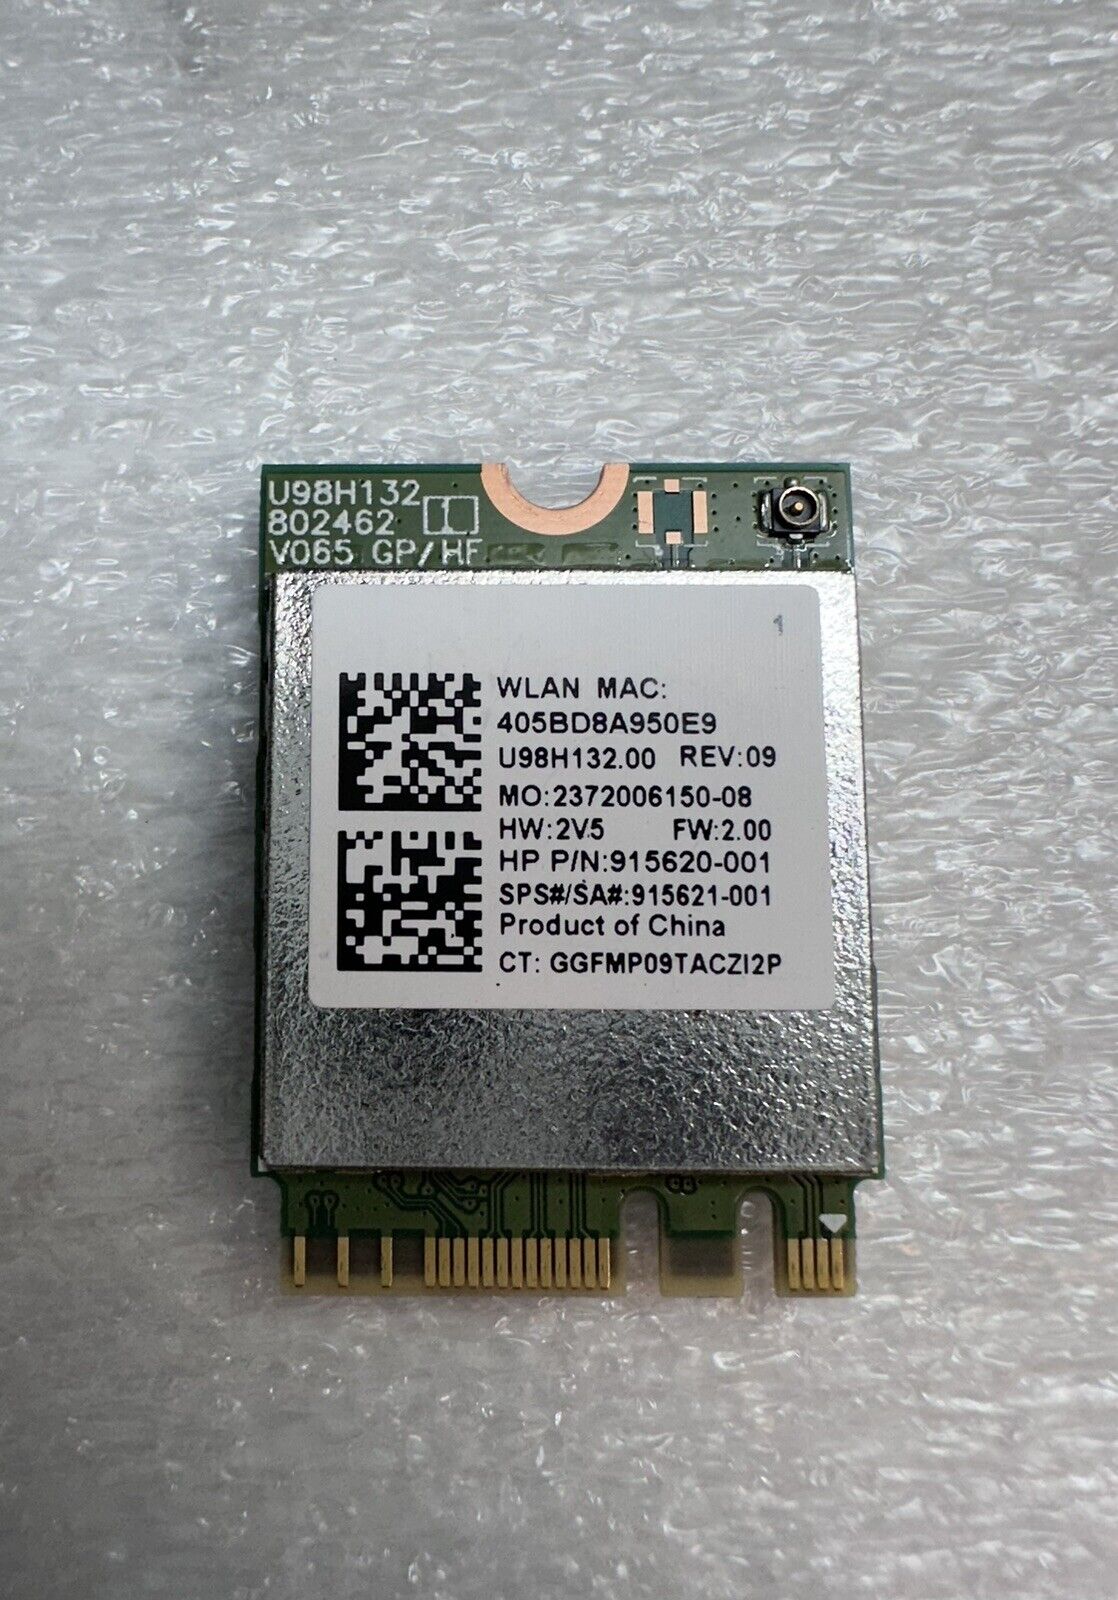 HP Wireless Bluetooth 4.2 Wi-Fi Card Realtek RTL8821CE PCI-Express 915620-001